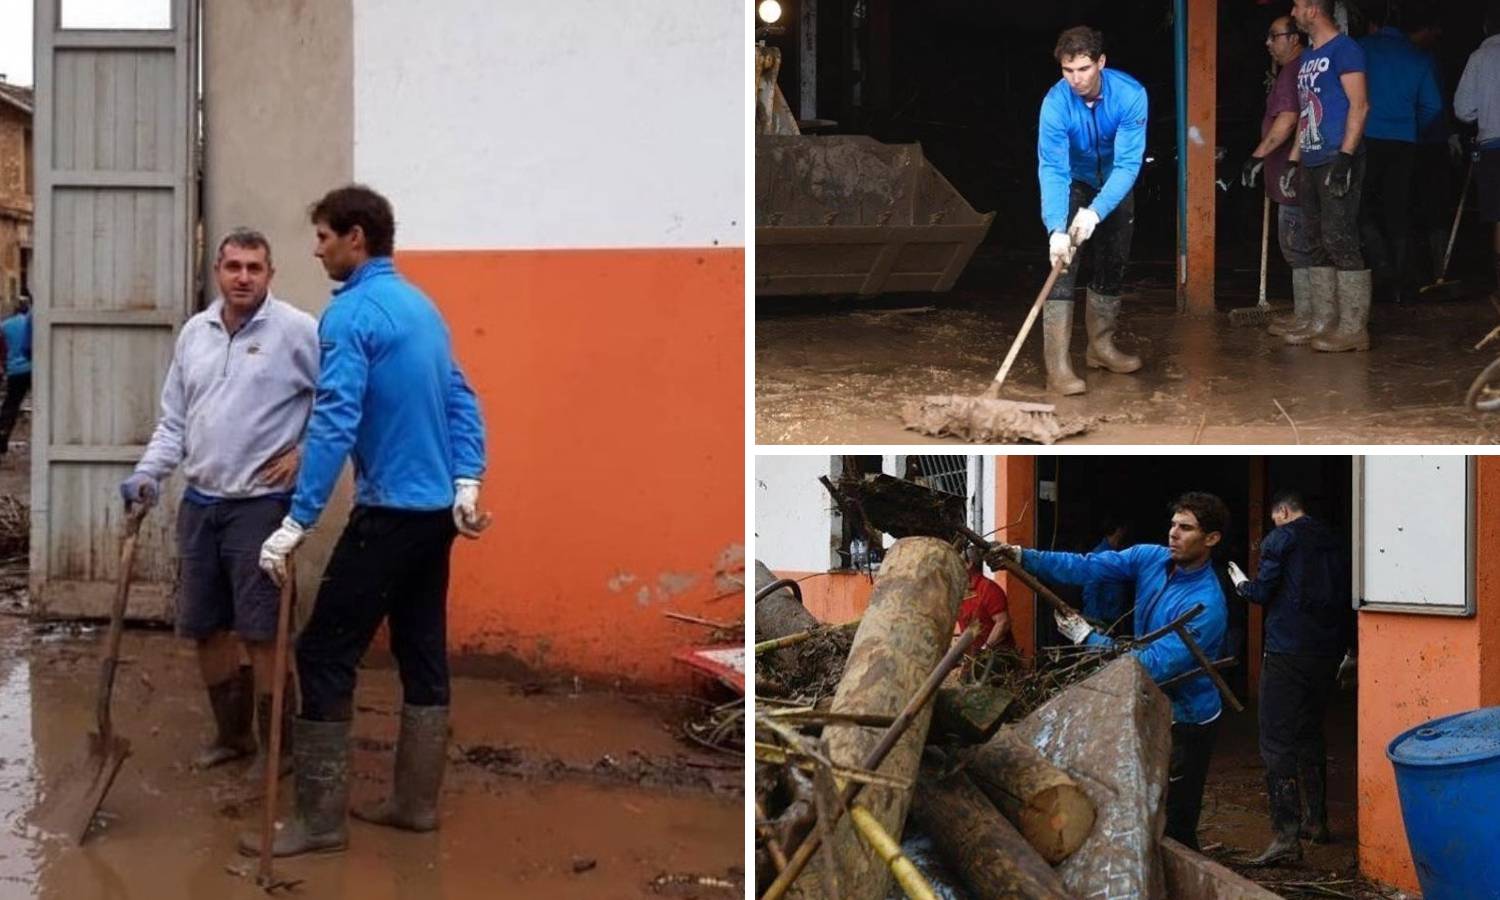 Nadal velikog srca: Nakon poplave pomaže čistiti ulice...